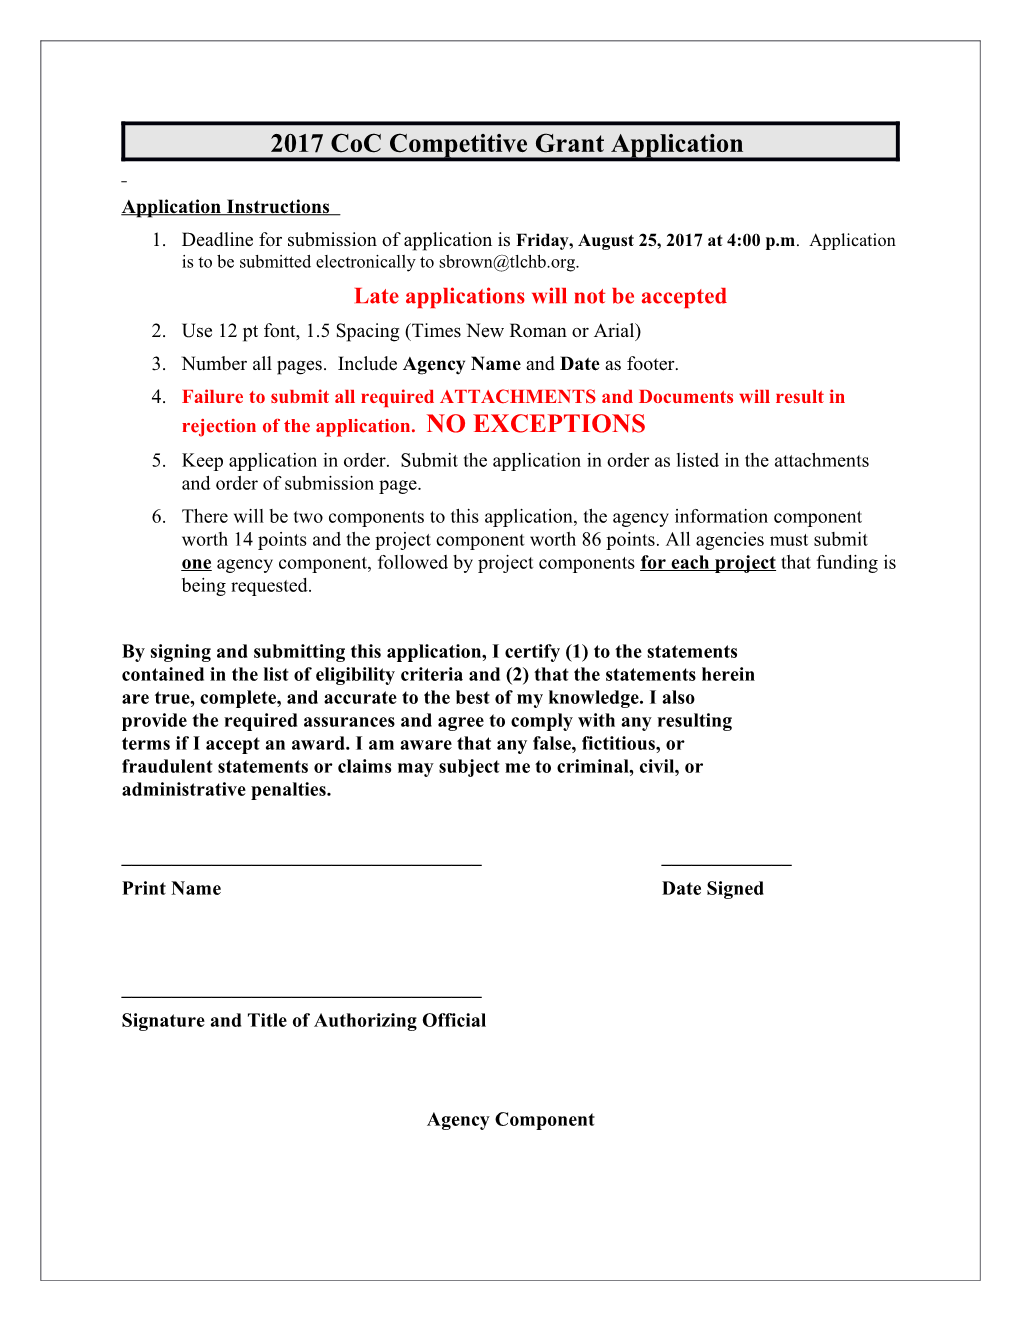 2017Coc Competitive Grant Application